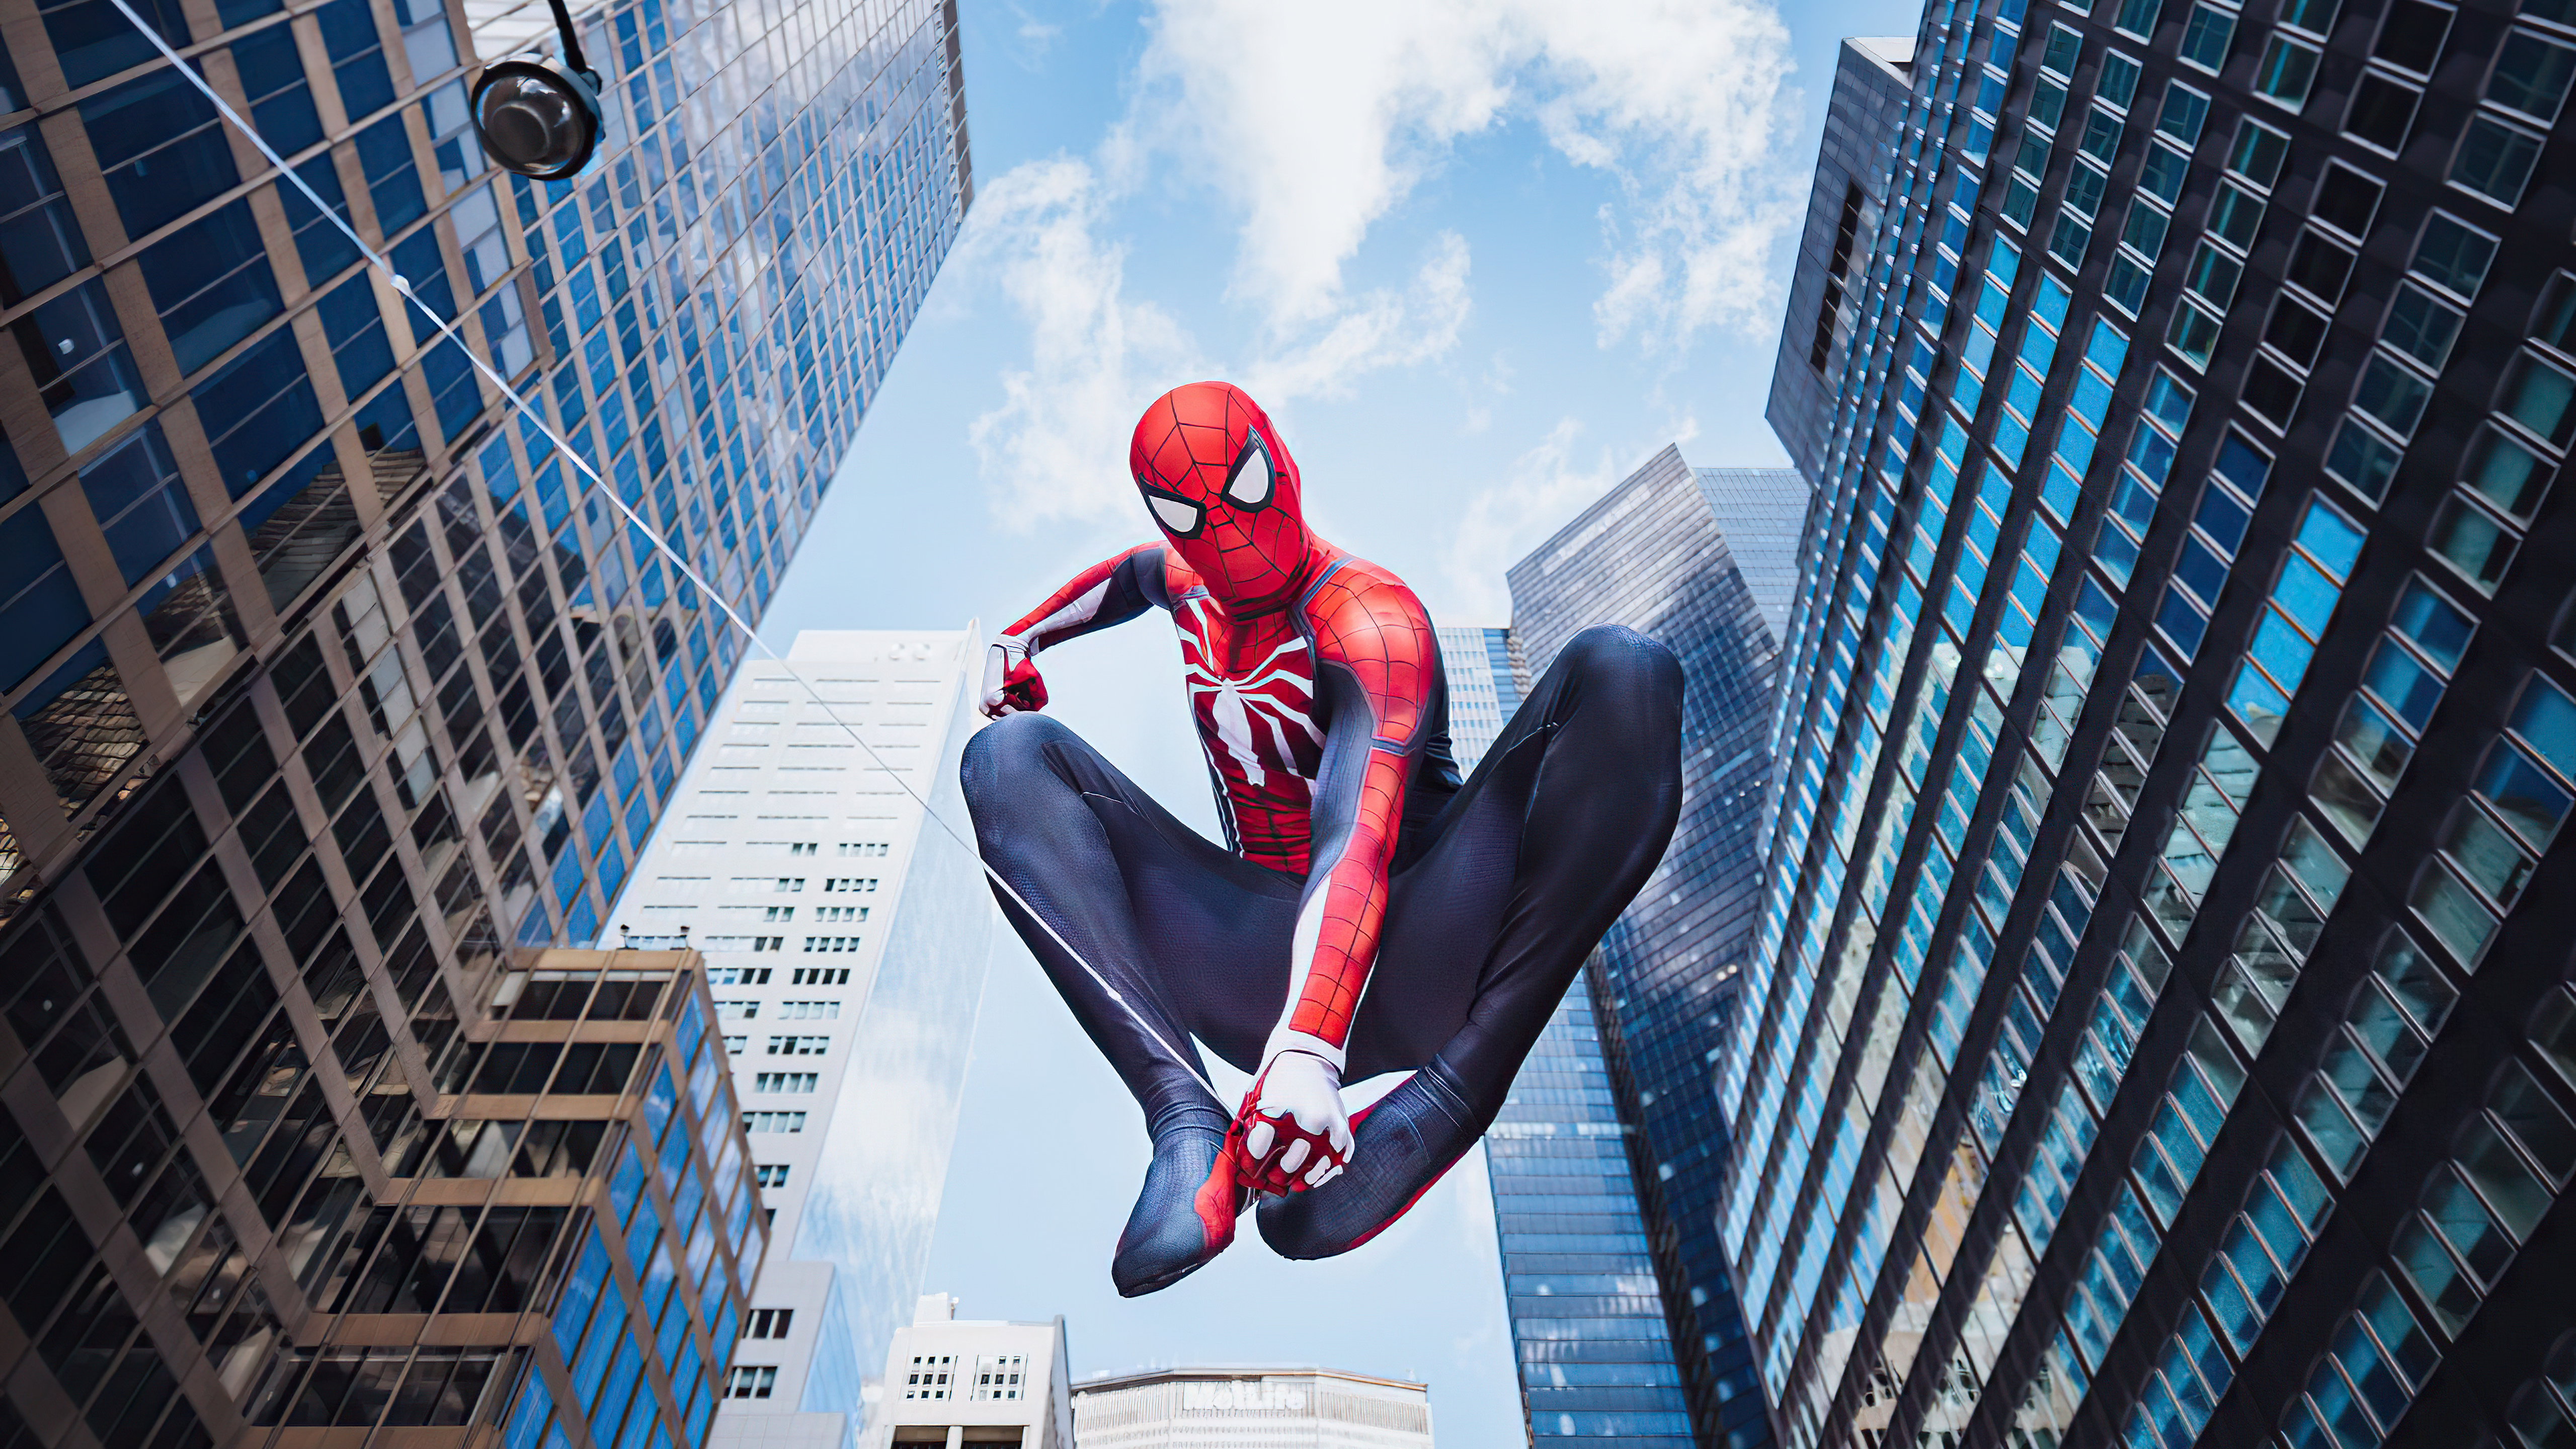 Free photo Spider-Man flies between high-rise buildings